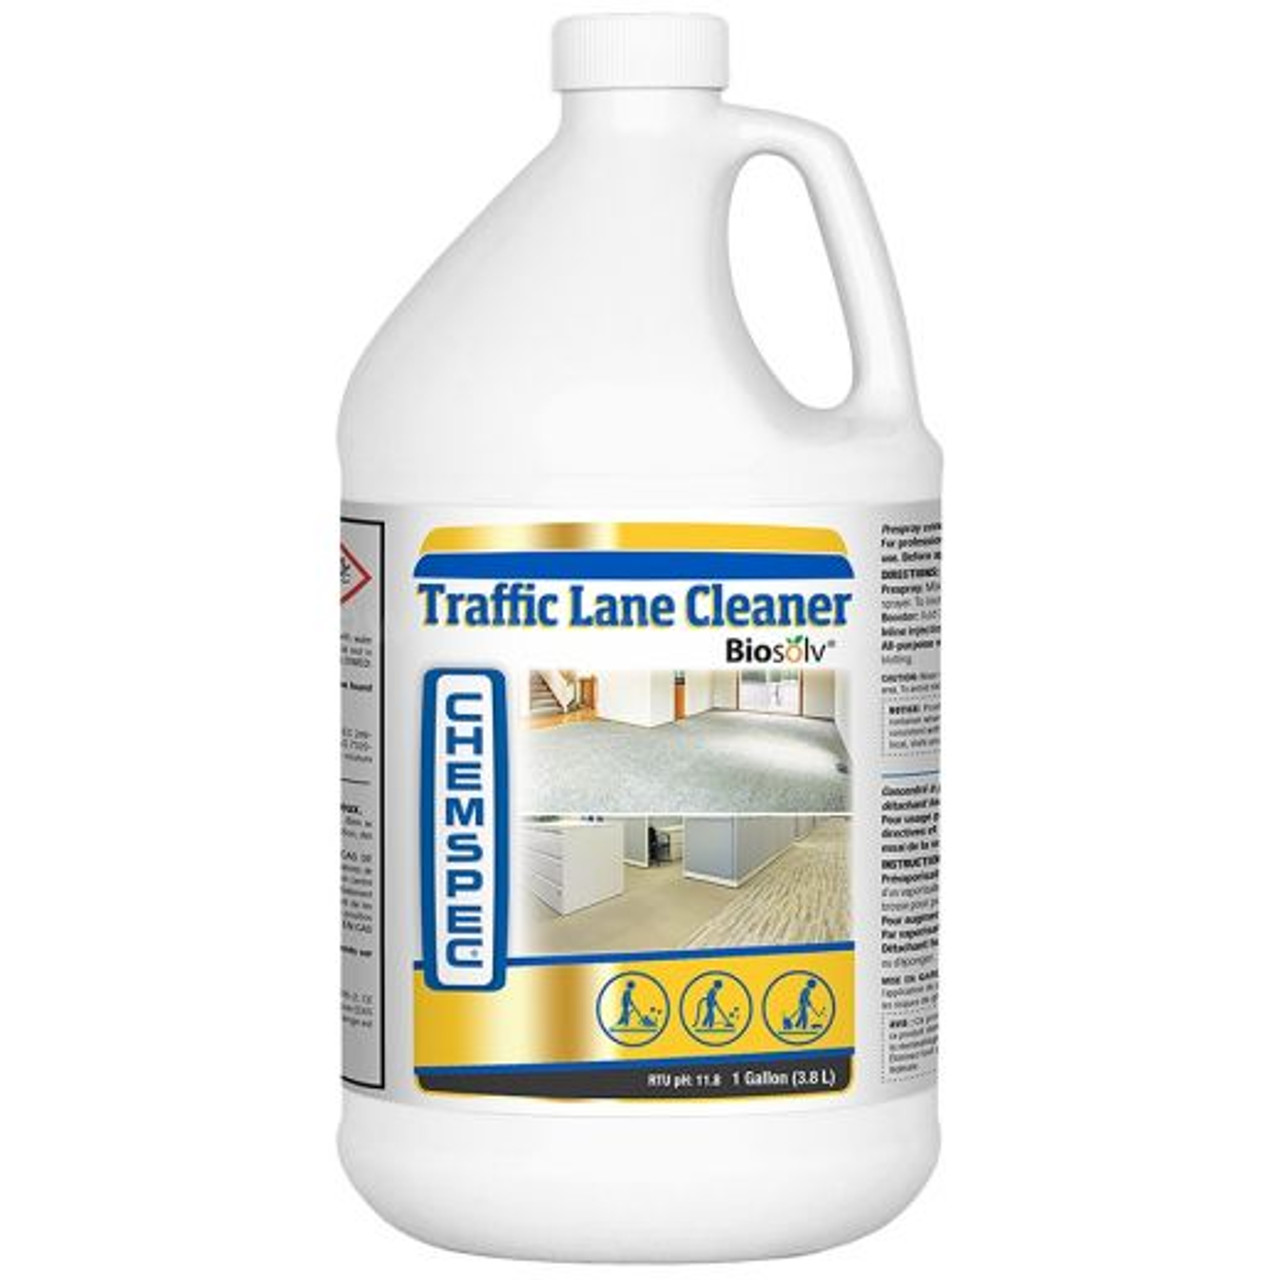 Chemspec Traffic Lane Cleaner with Biosolv (1 GL)